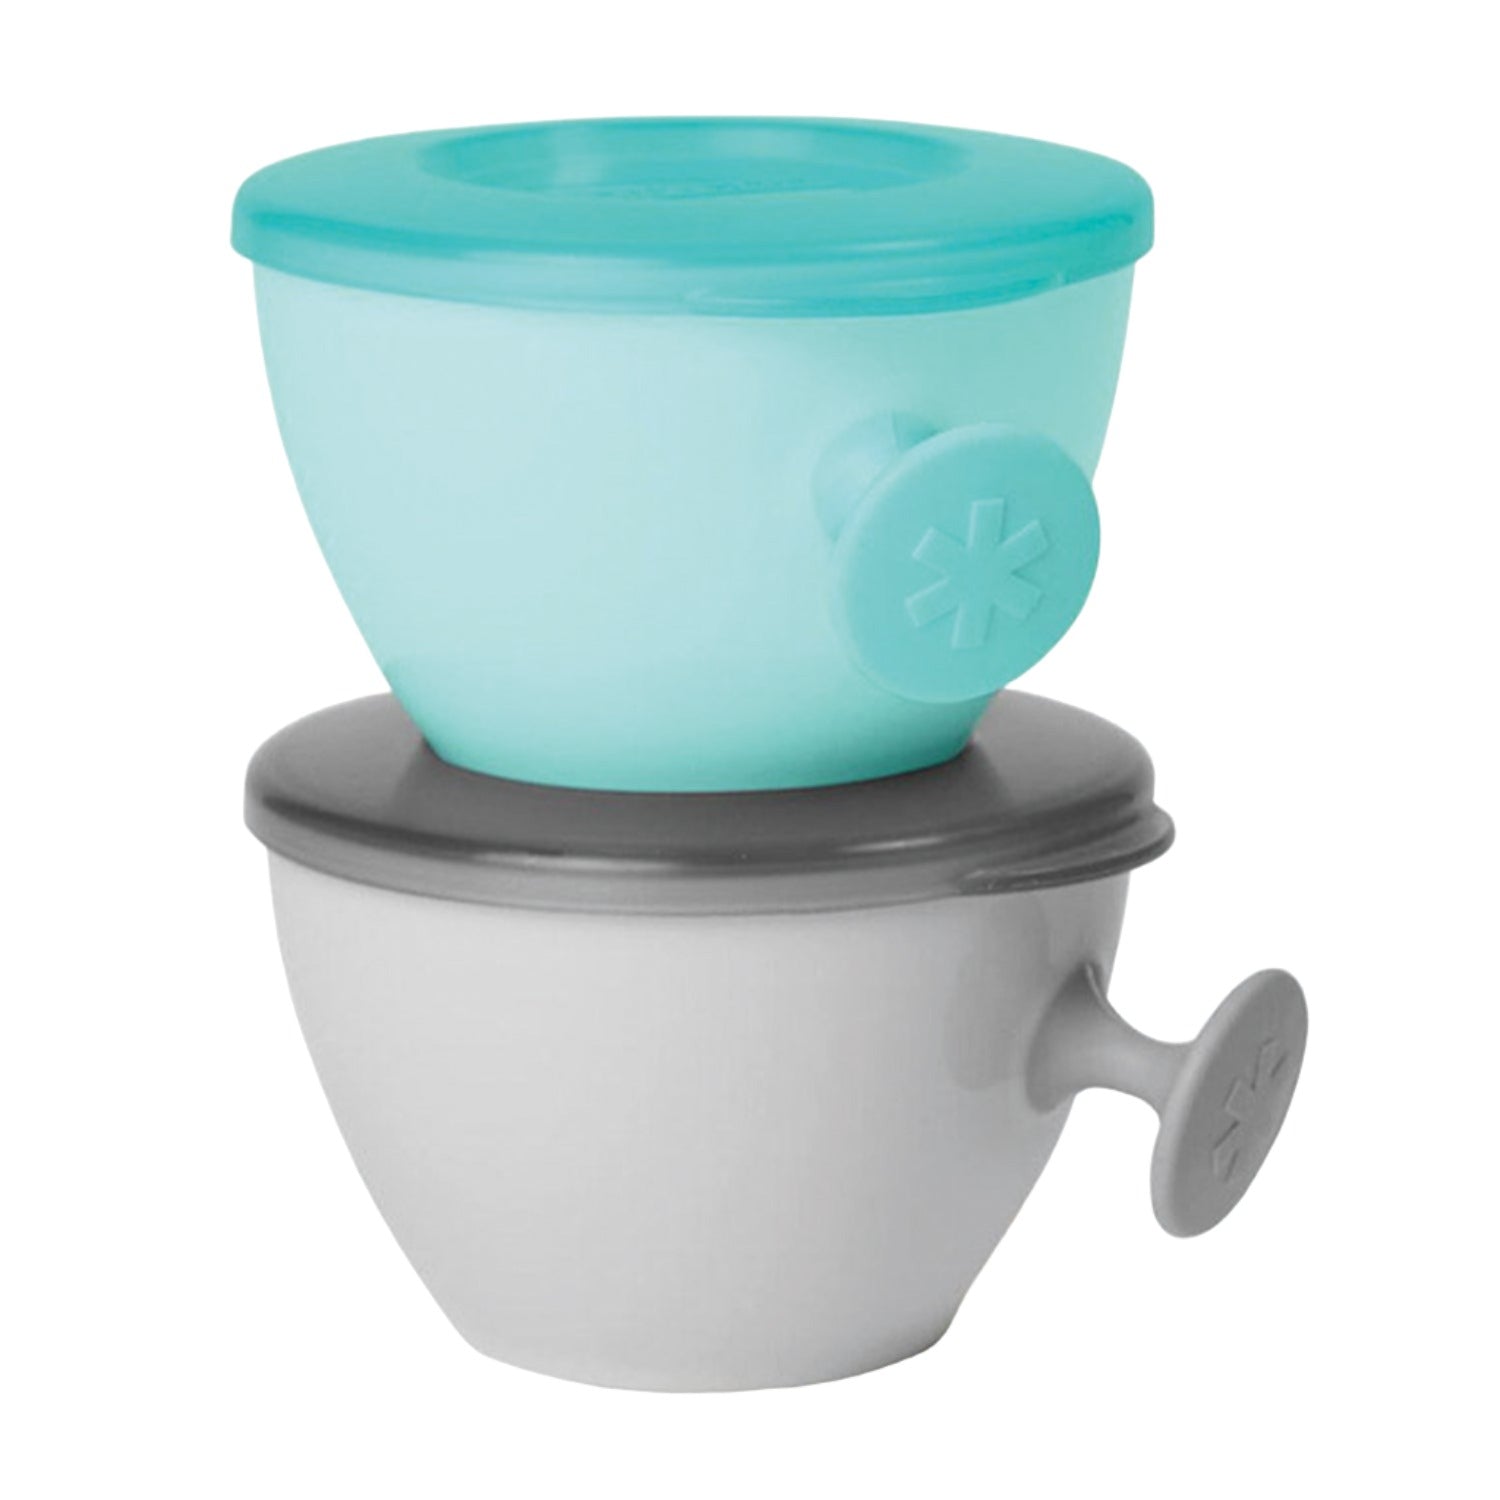 An image of Feeding Bowls - Weaning Bowl - Easy-Grab Bowls | Skip Hop Teal